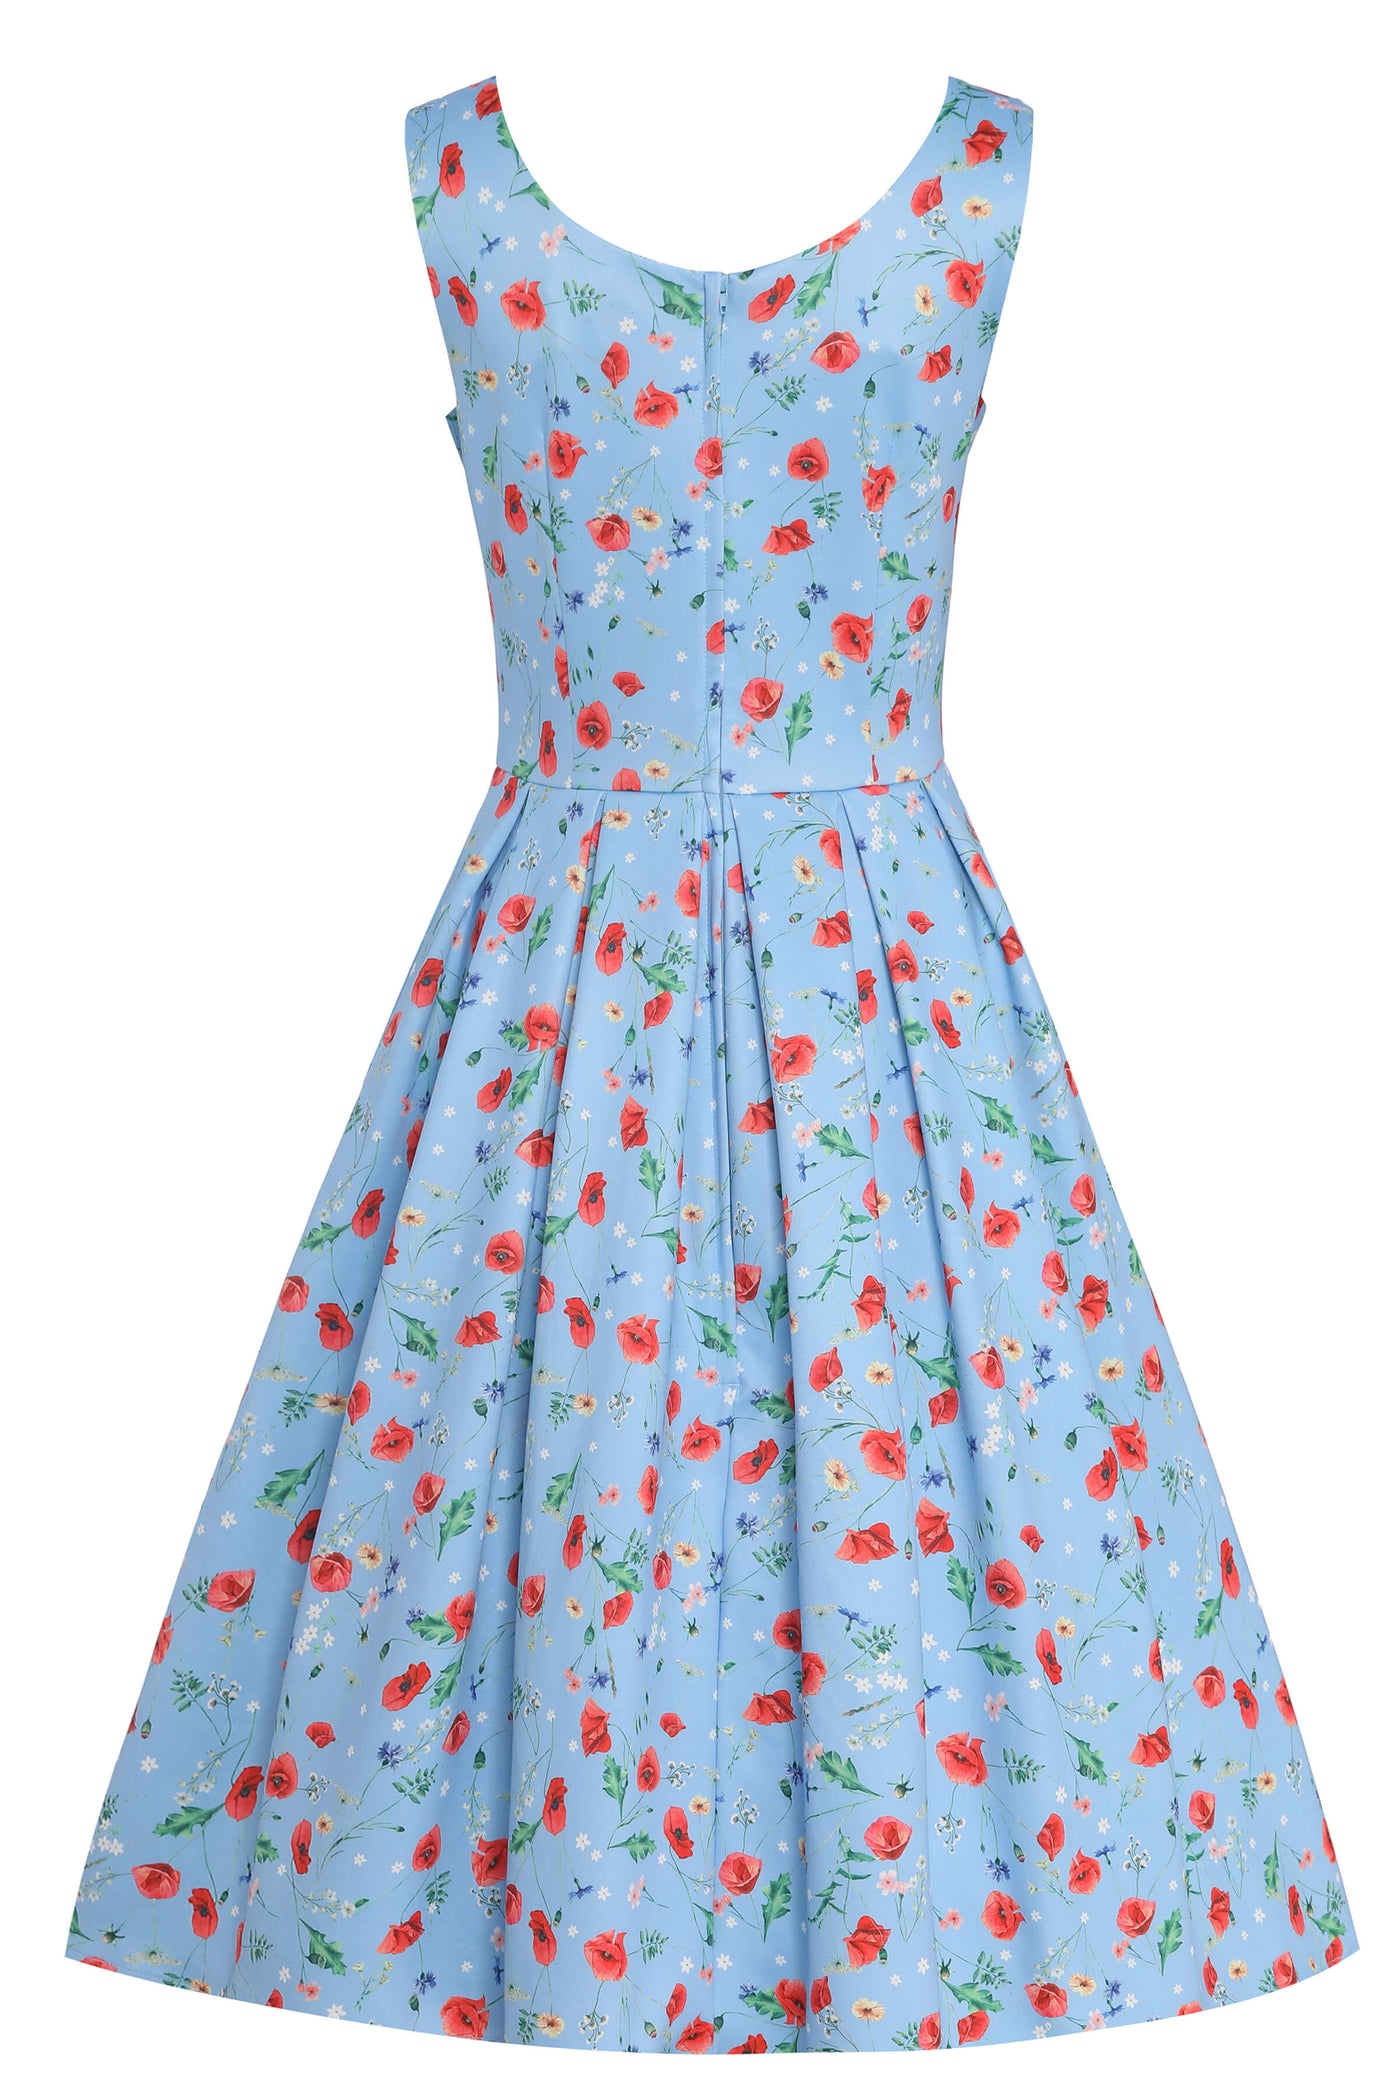 amanda light blue poppy floral swing dress front angle